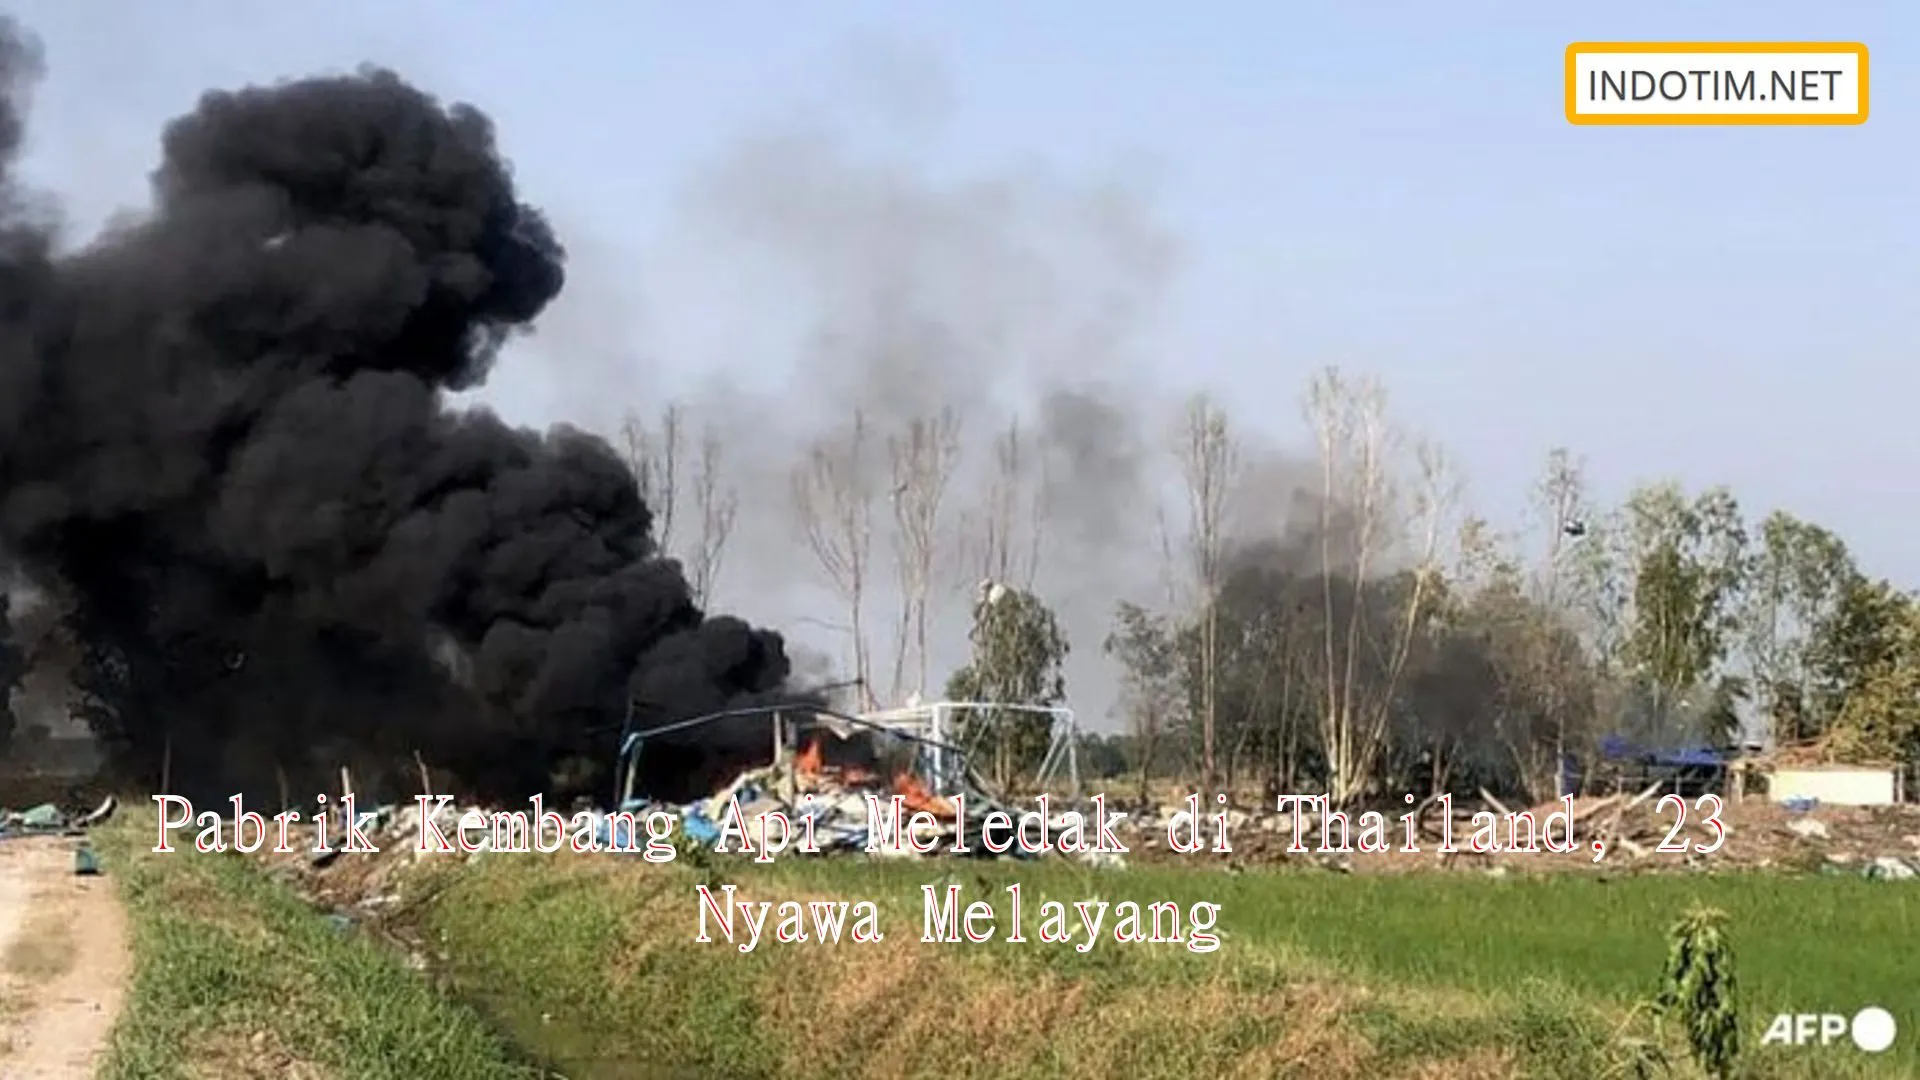 Pabrik Kembang Api Meledak di Thailand, 23 Nyawa Melayang